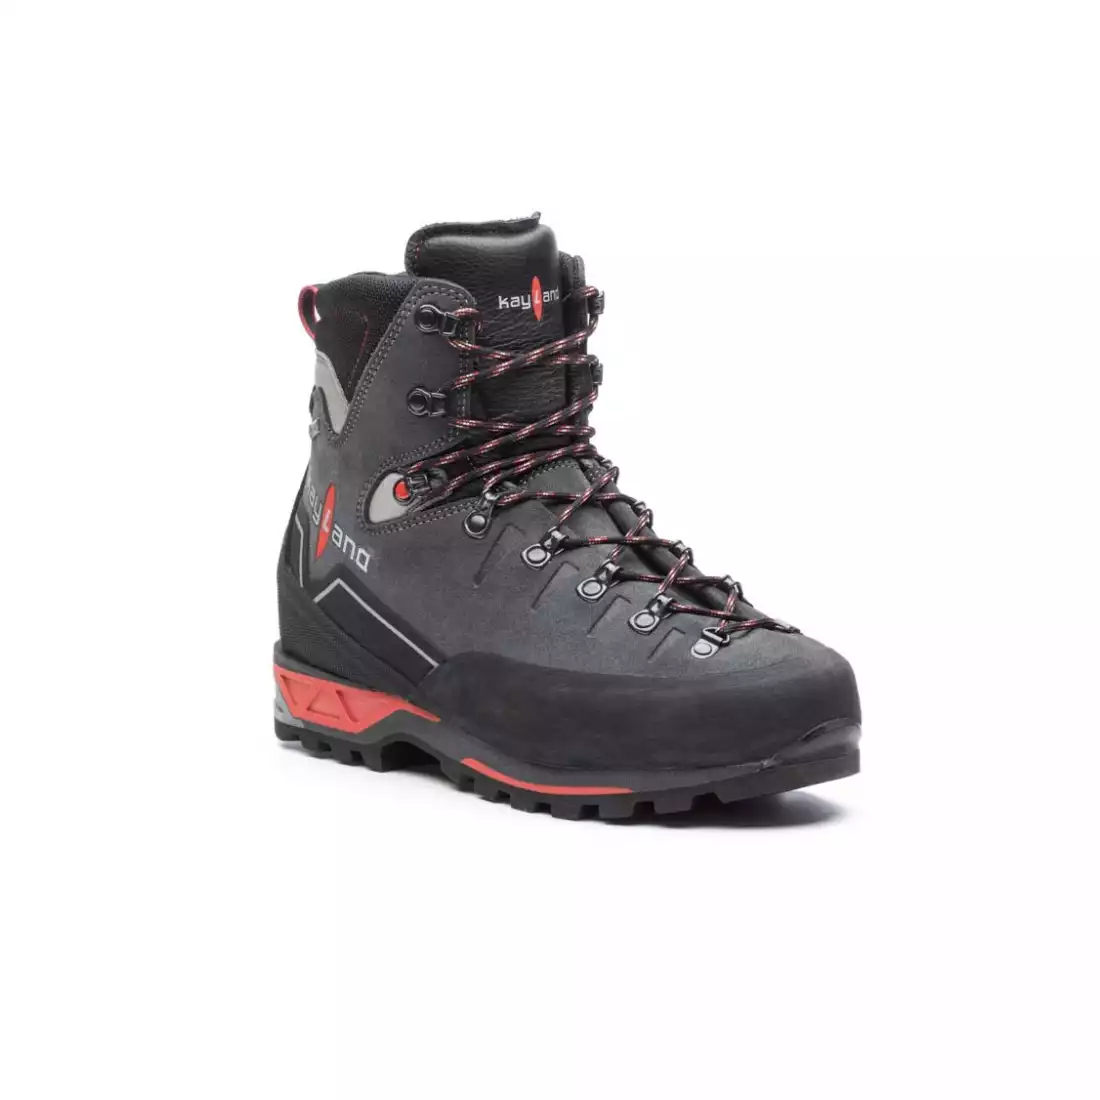 KAYLAND SUPER ROCK GTX Men's hiking shoes in high mountains, GORE-TEX, VIBRAM, grey